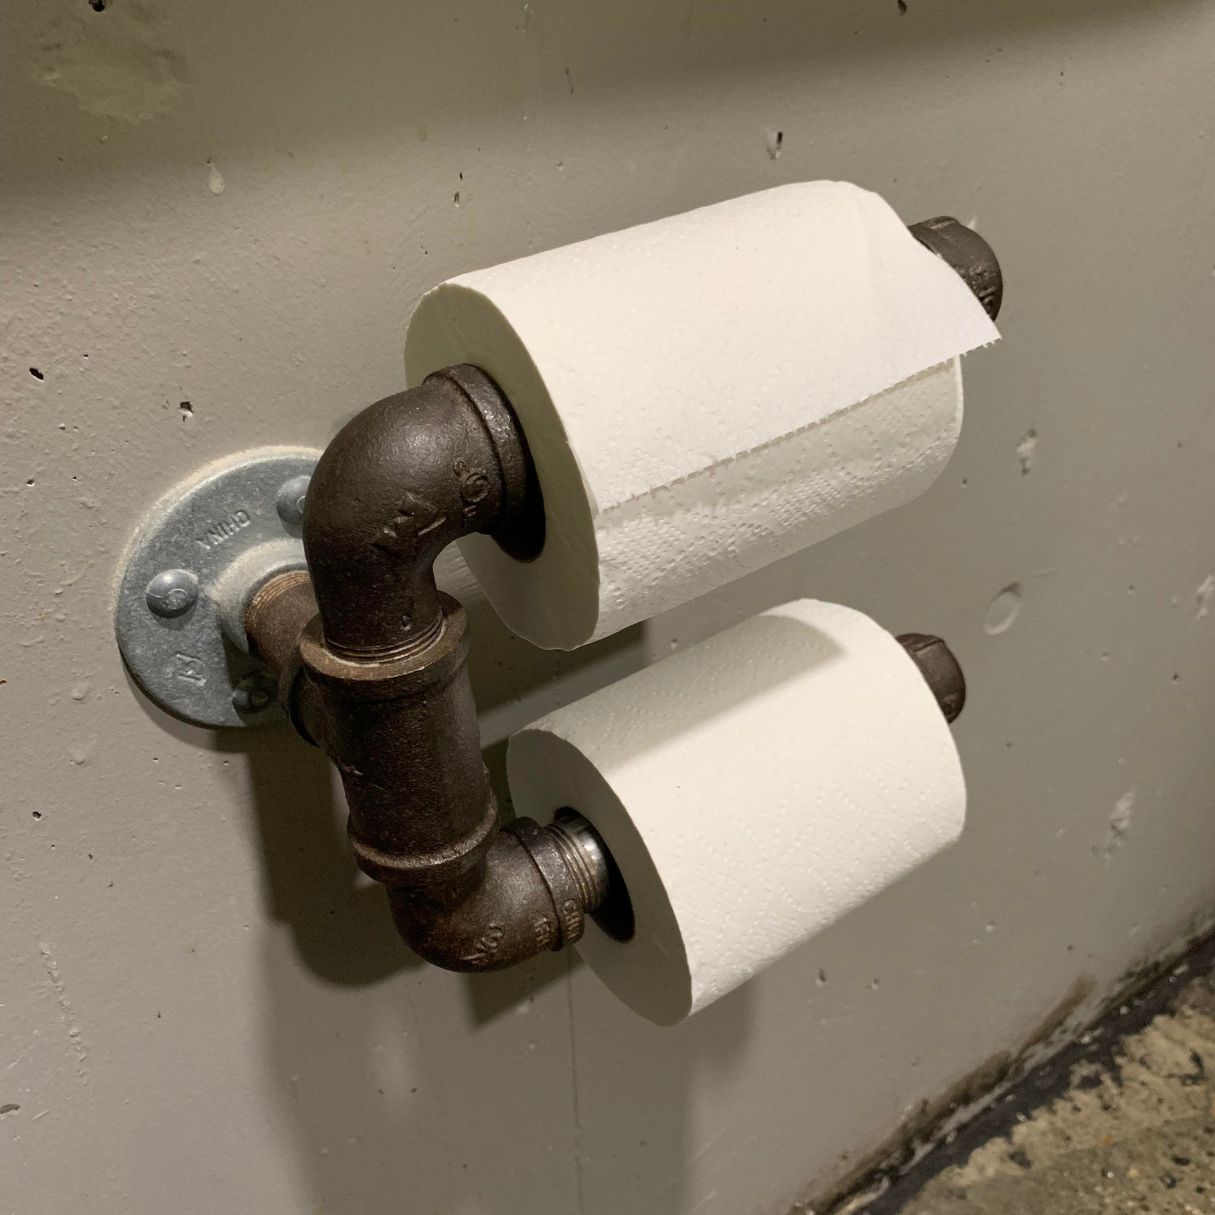 How To Unlock Industrial Toilet Paper Holder